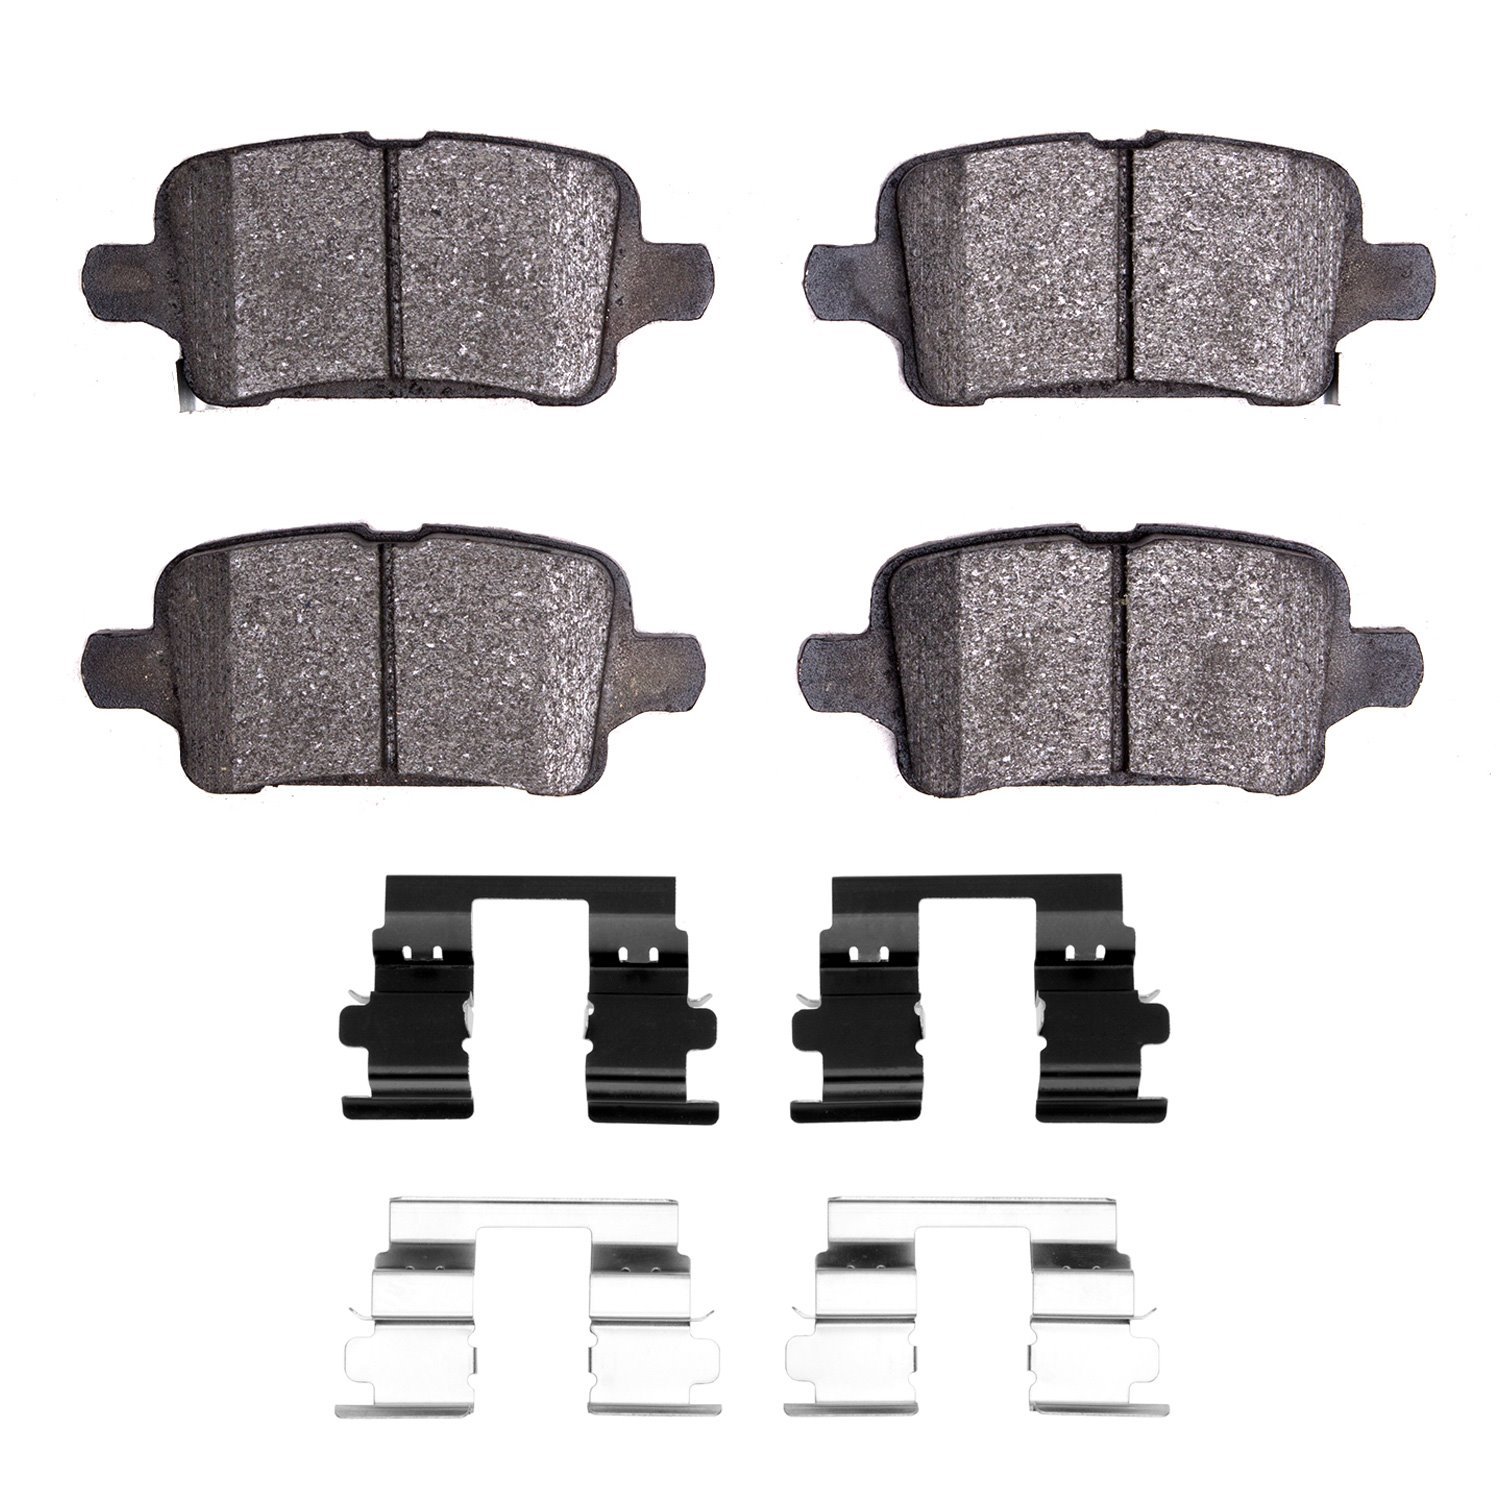 1551-1857-01 5000 Advanced Ceramic Brake Pads & Hardware Kit, Fits Select GM, Position: Rear